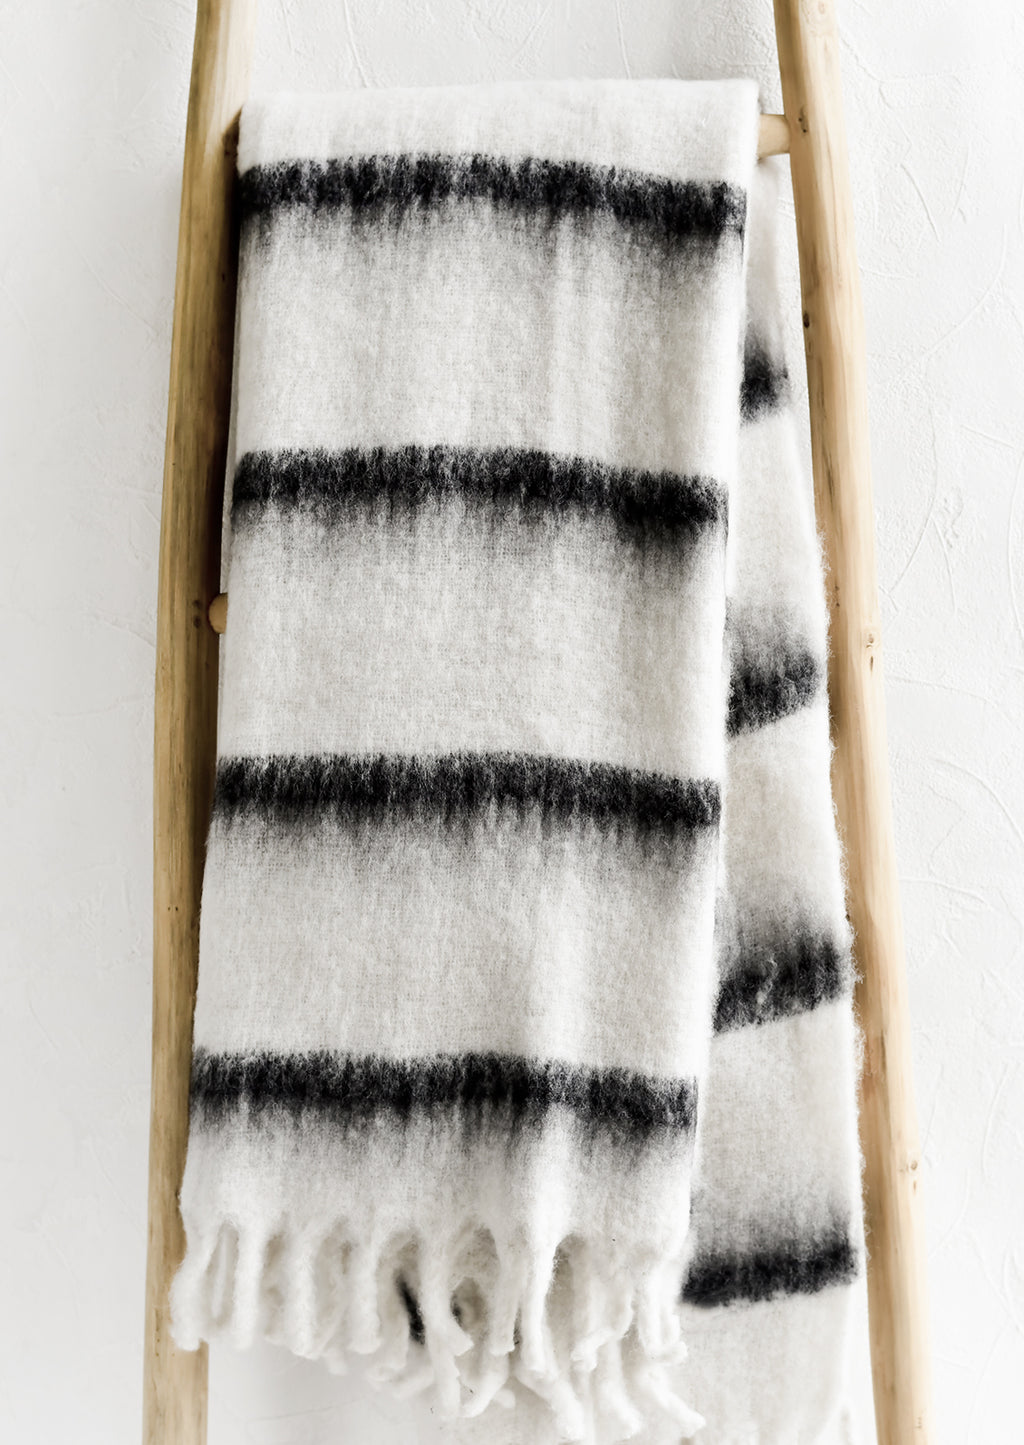 1: A fuzzy throw blanket in white with black stripes.